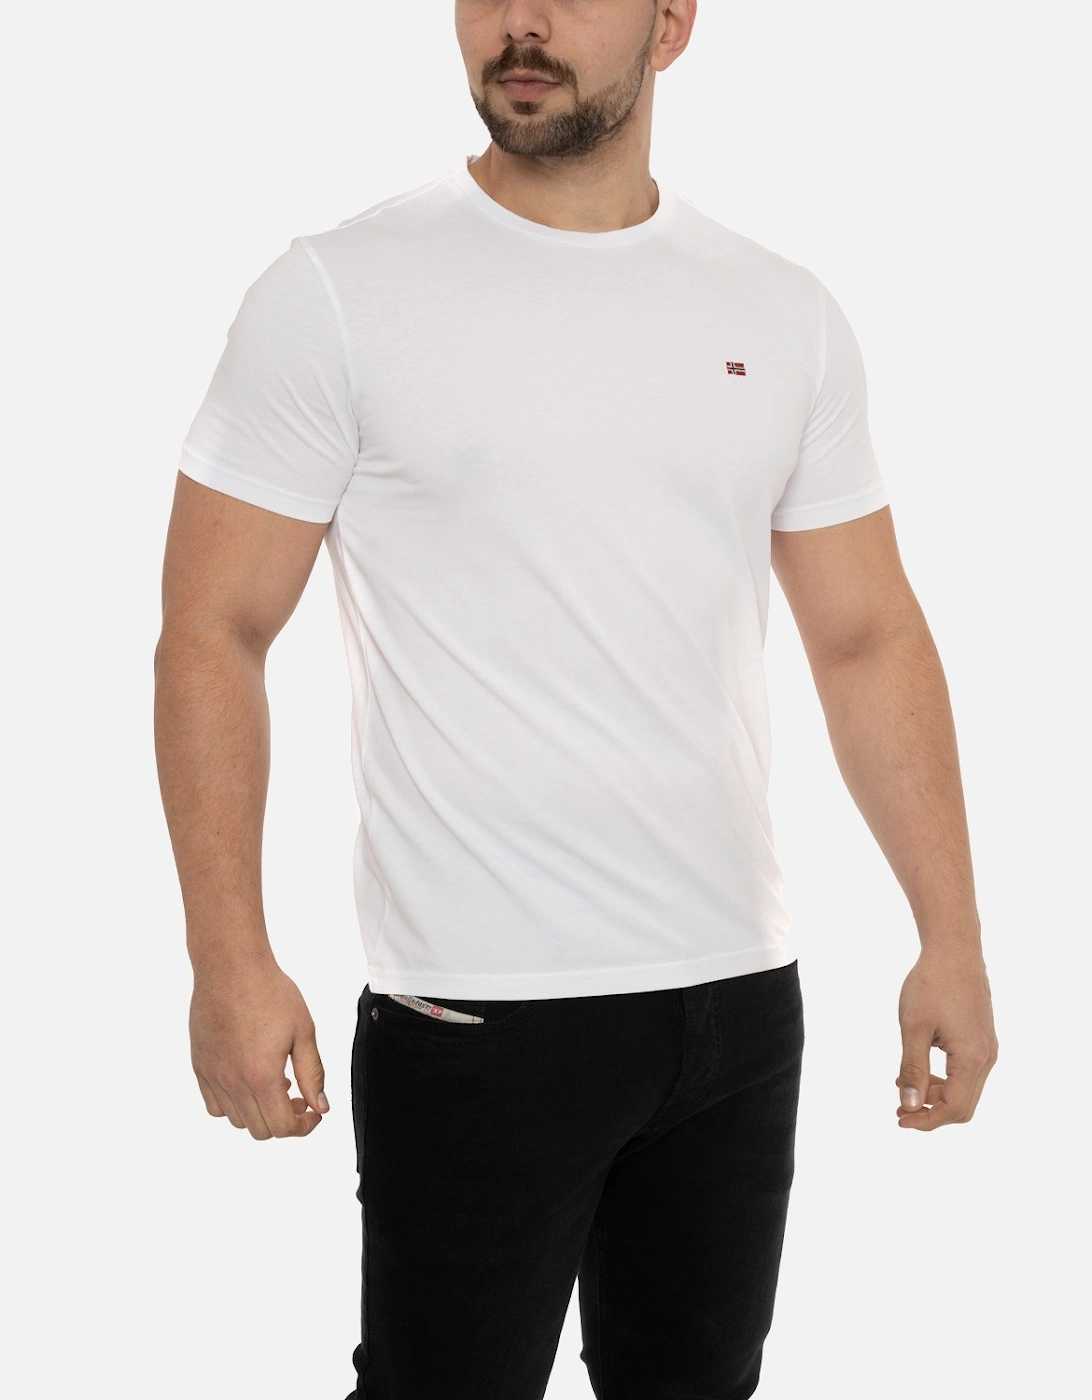 Mens Salis Sum T-Shirt (White)